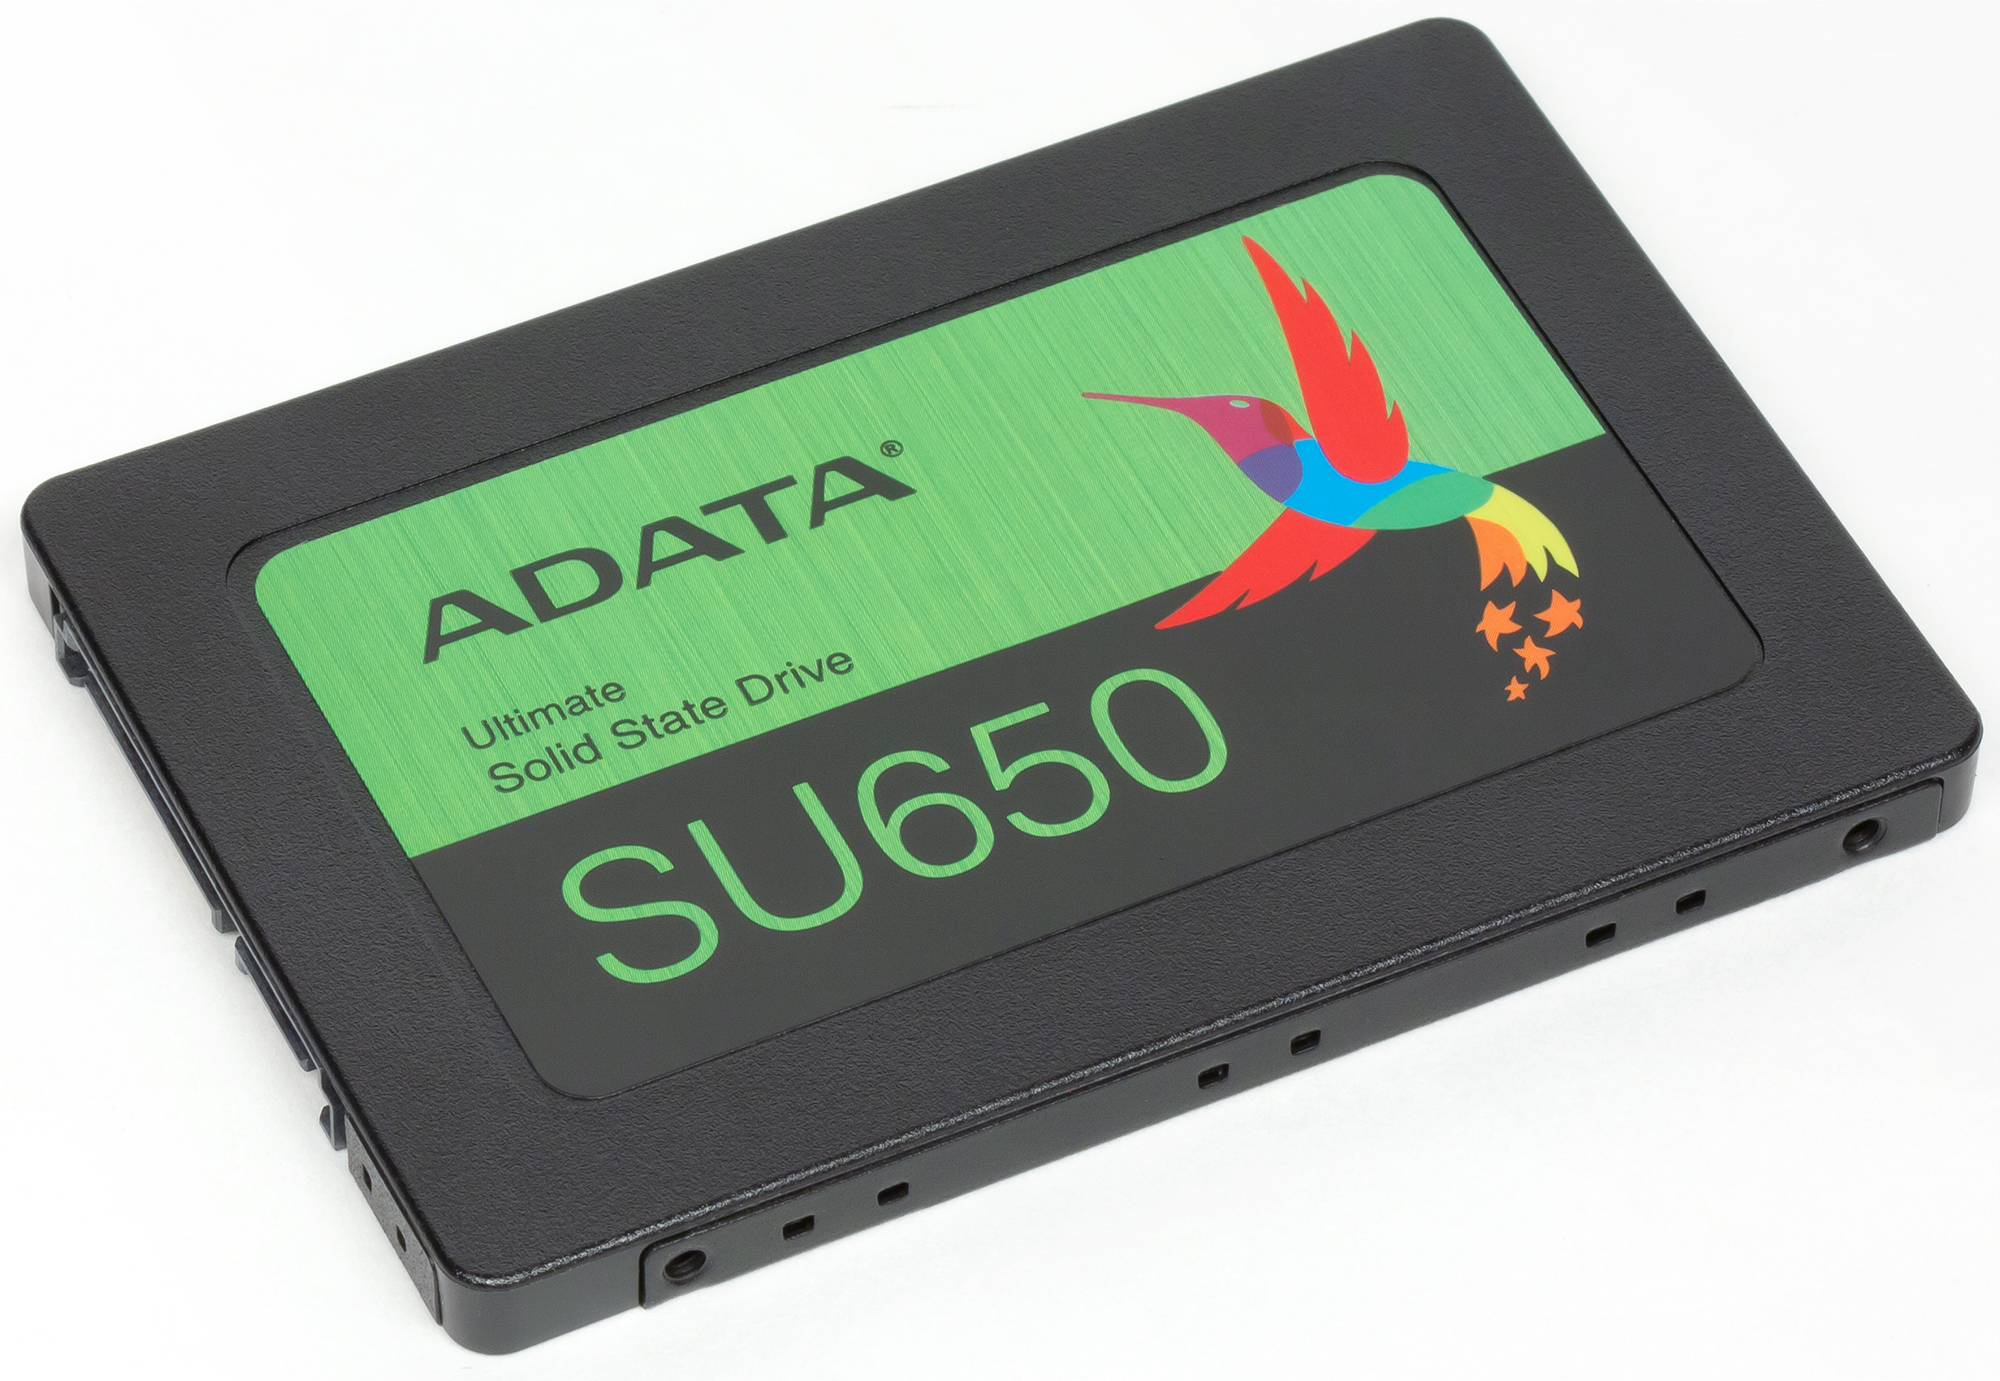 Ssd 650. SSD A data su650. SSD A-data su650 240гб. 240 ГБ 2.5" SATA накопитель a-data su650. 2.5 SATA 6 GB/S SSD su650.